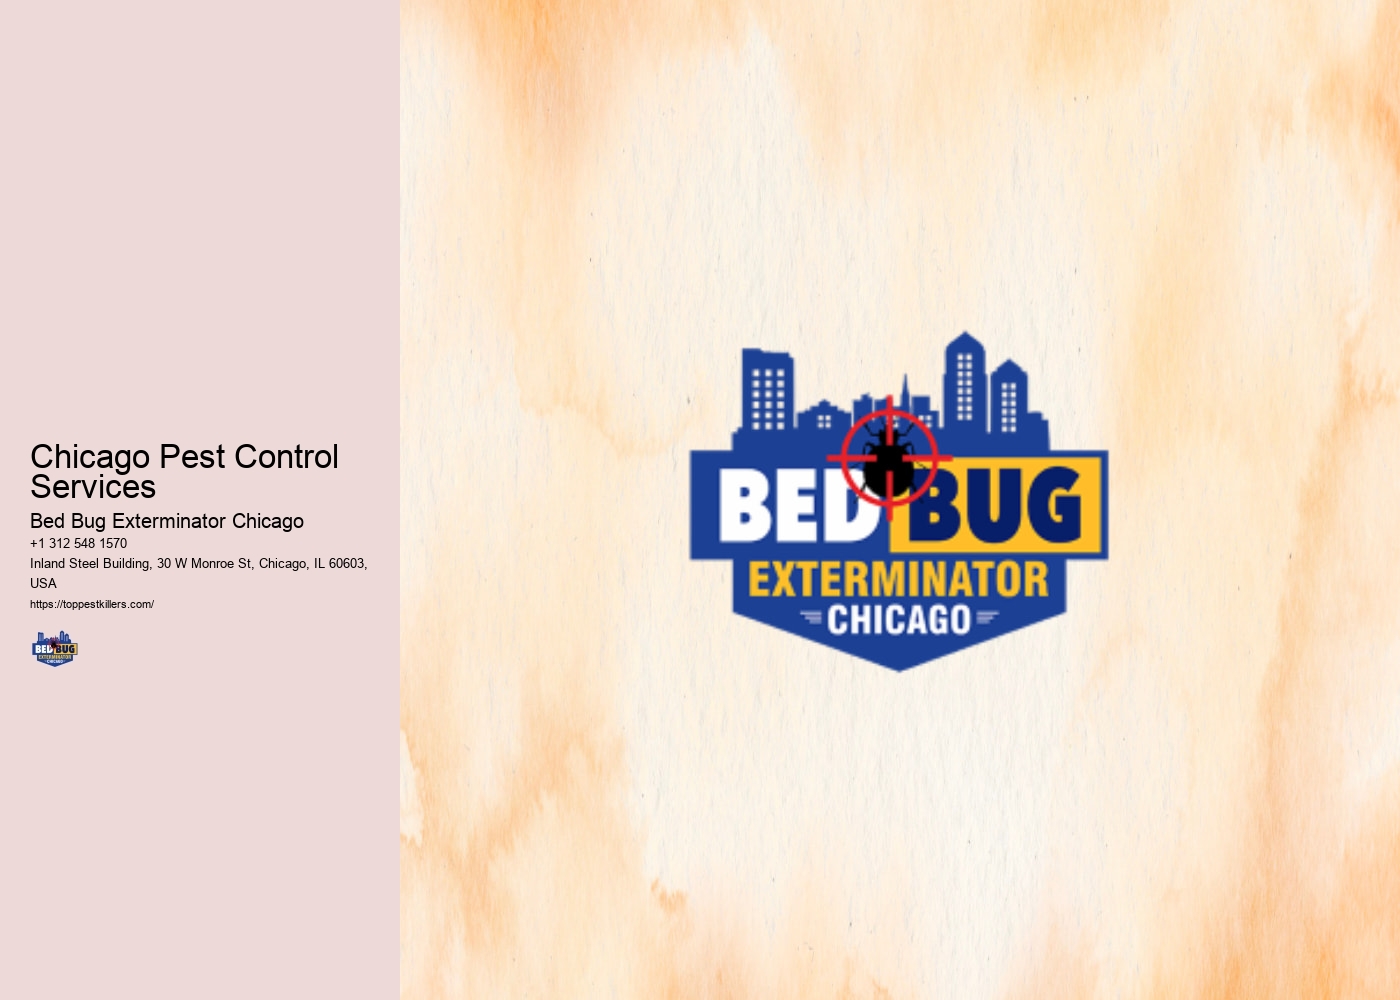 Chicago Pest Control Services